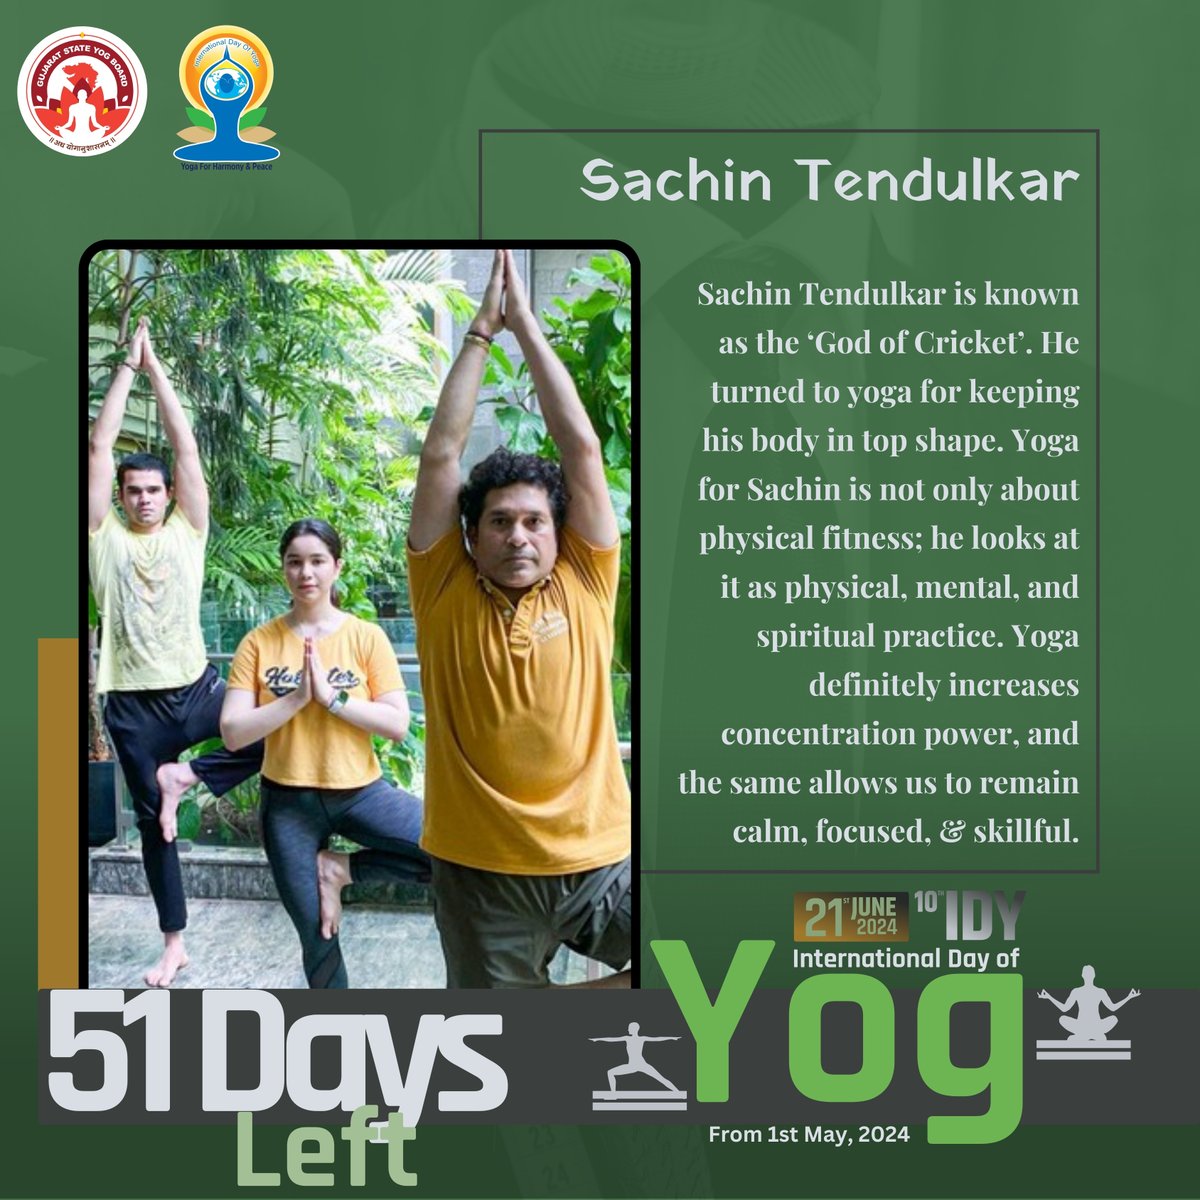 51 Days left to International Day of Yoga 2024

#GujaratStateYogBoard #YogmayGujarat #yogkaamrutkal #IDY2024